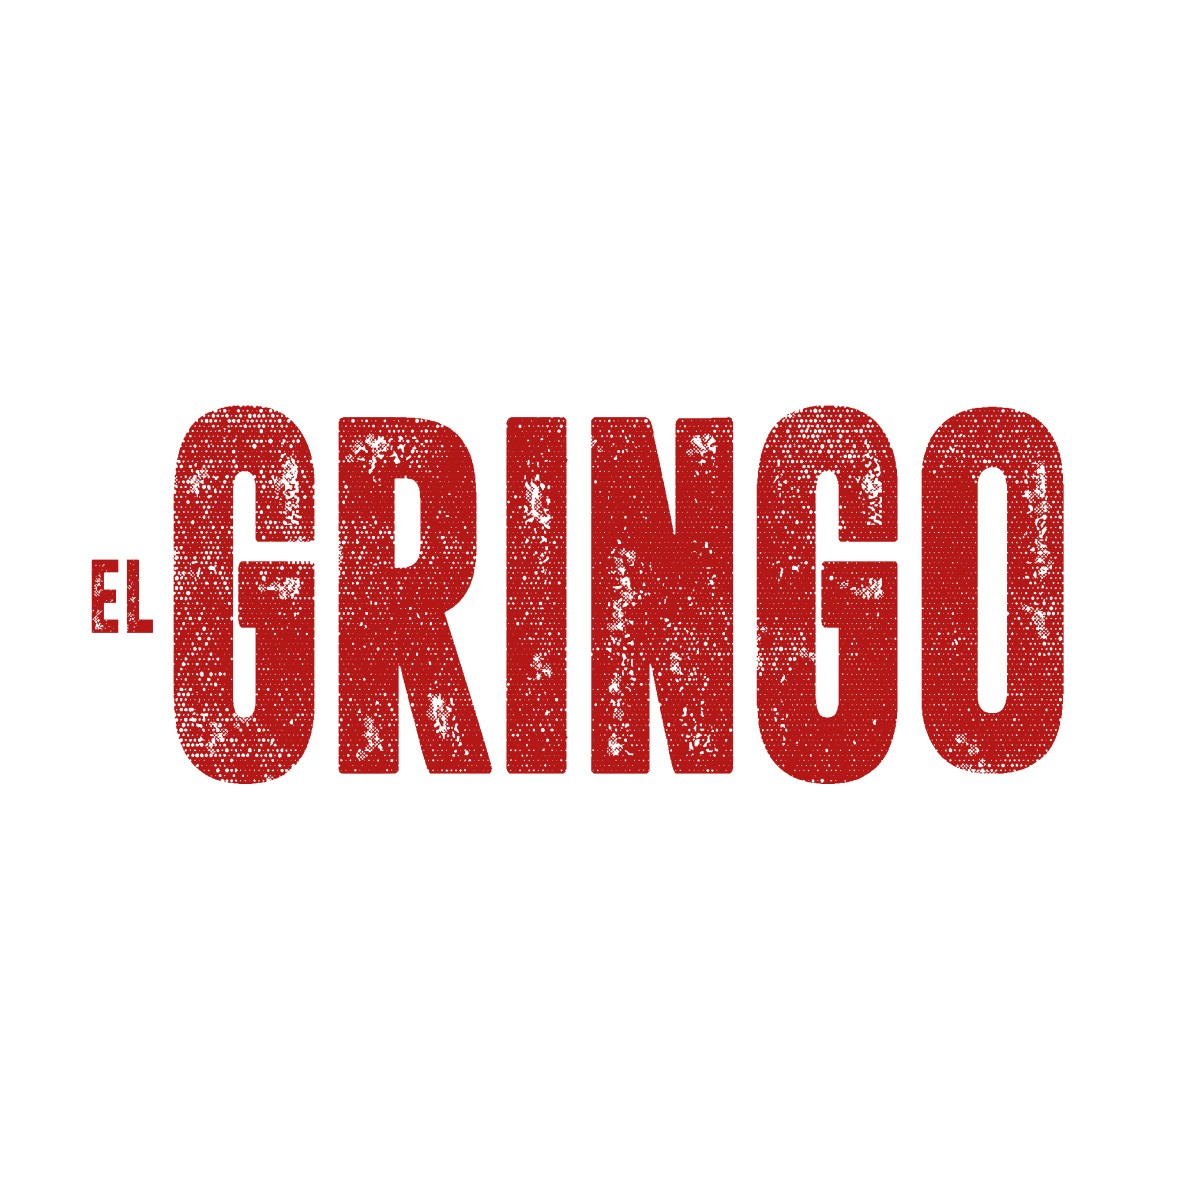 El Gringo is live... and alive!!